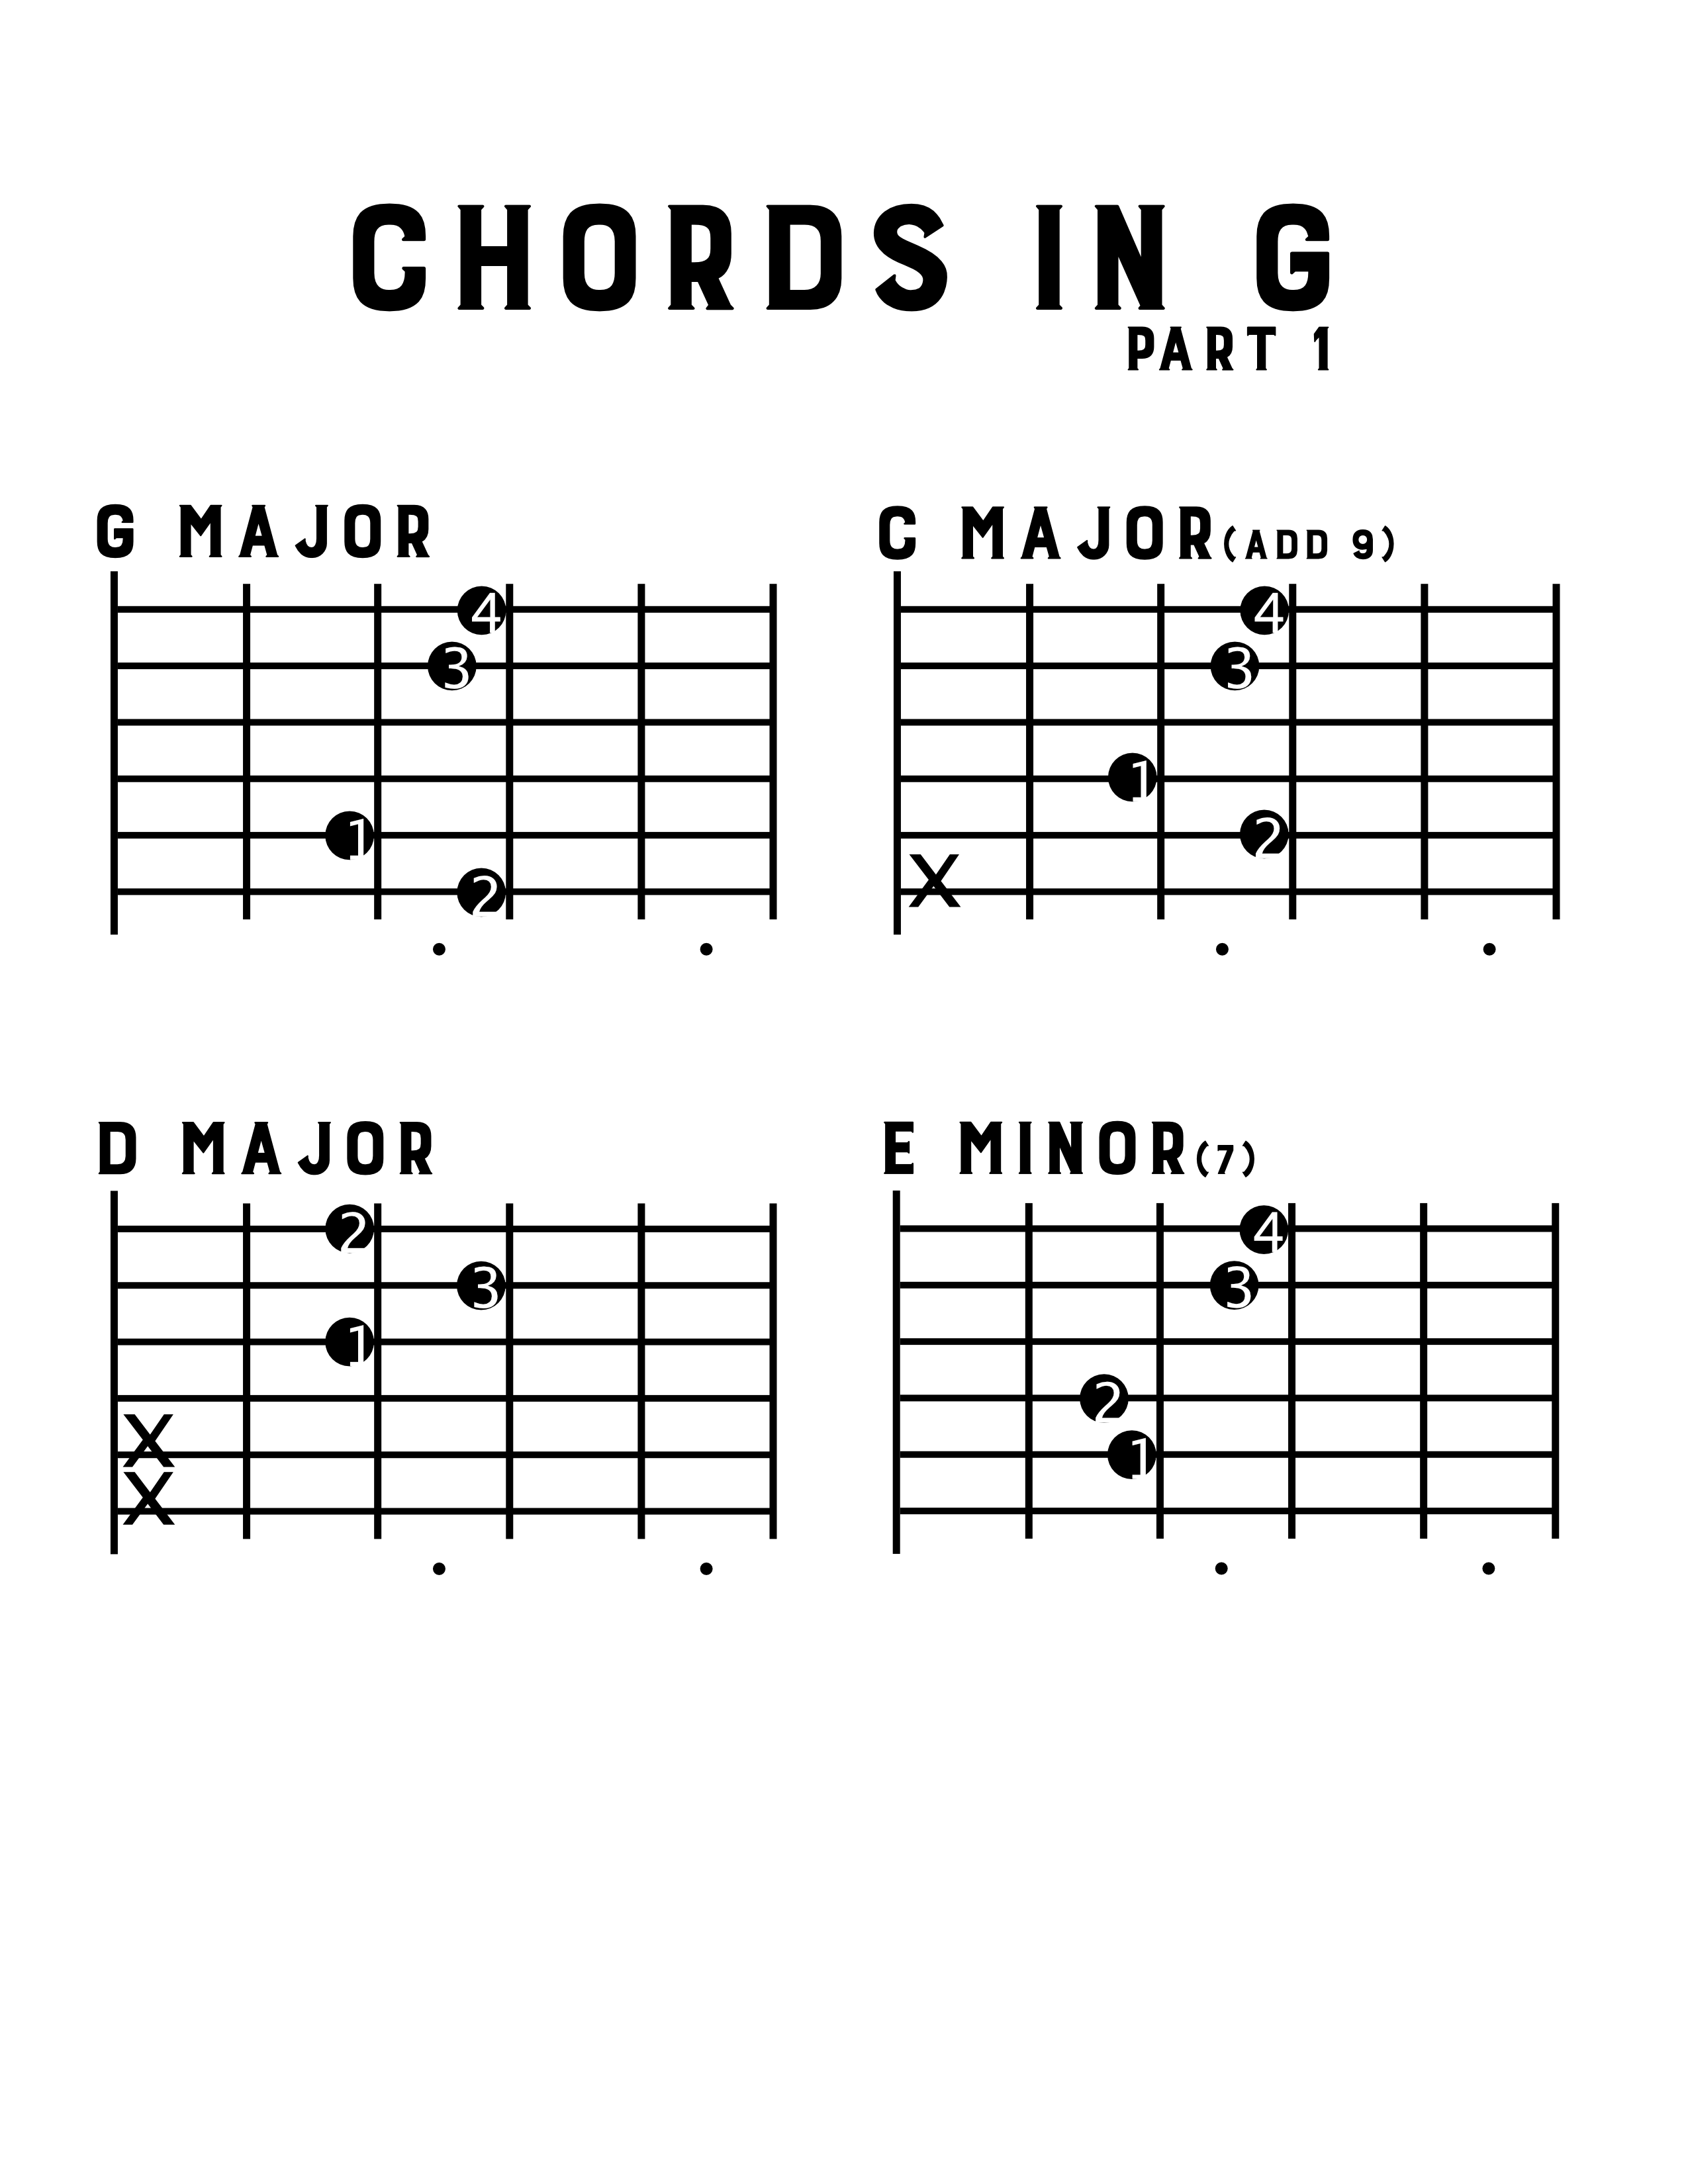 Chords in G